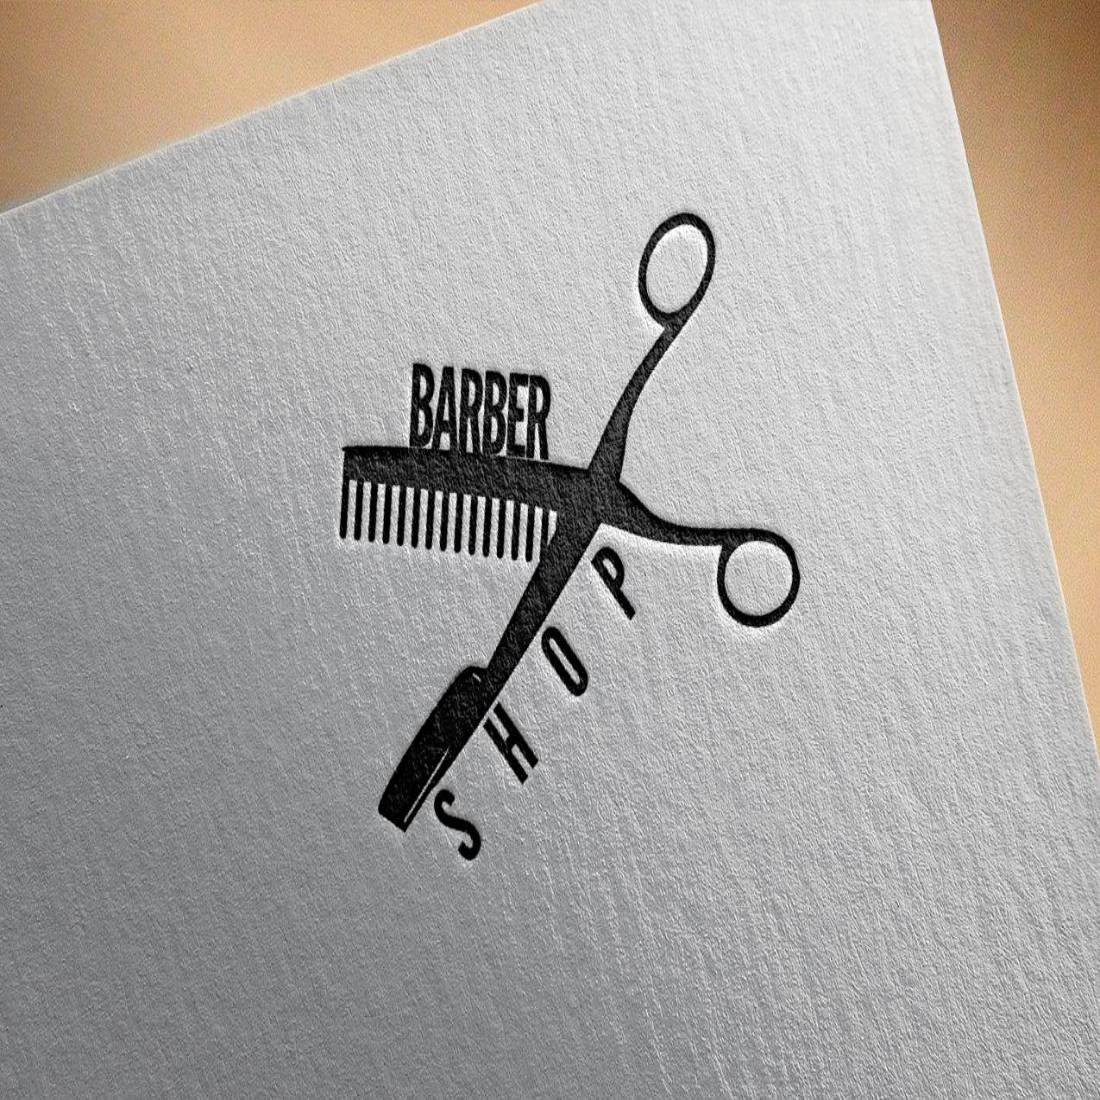 Hair Salon Logo Design Template cover image.